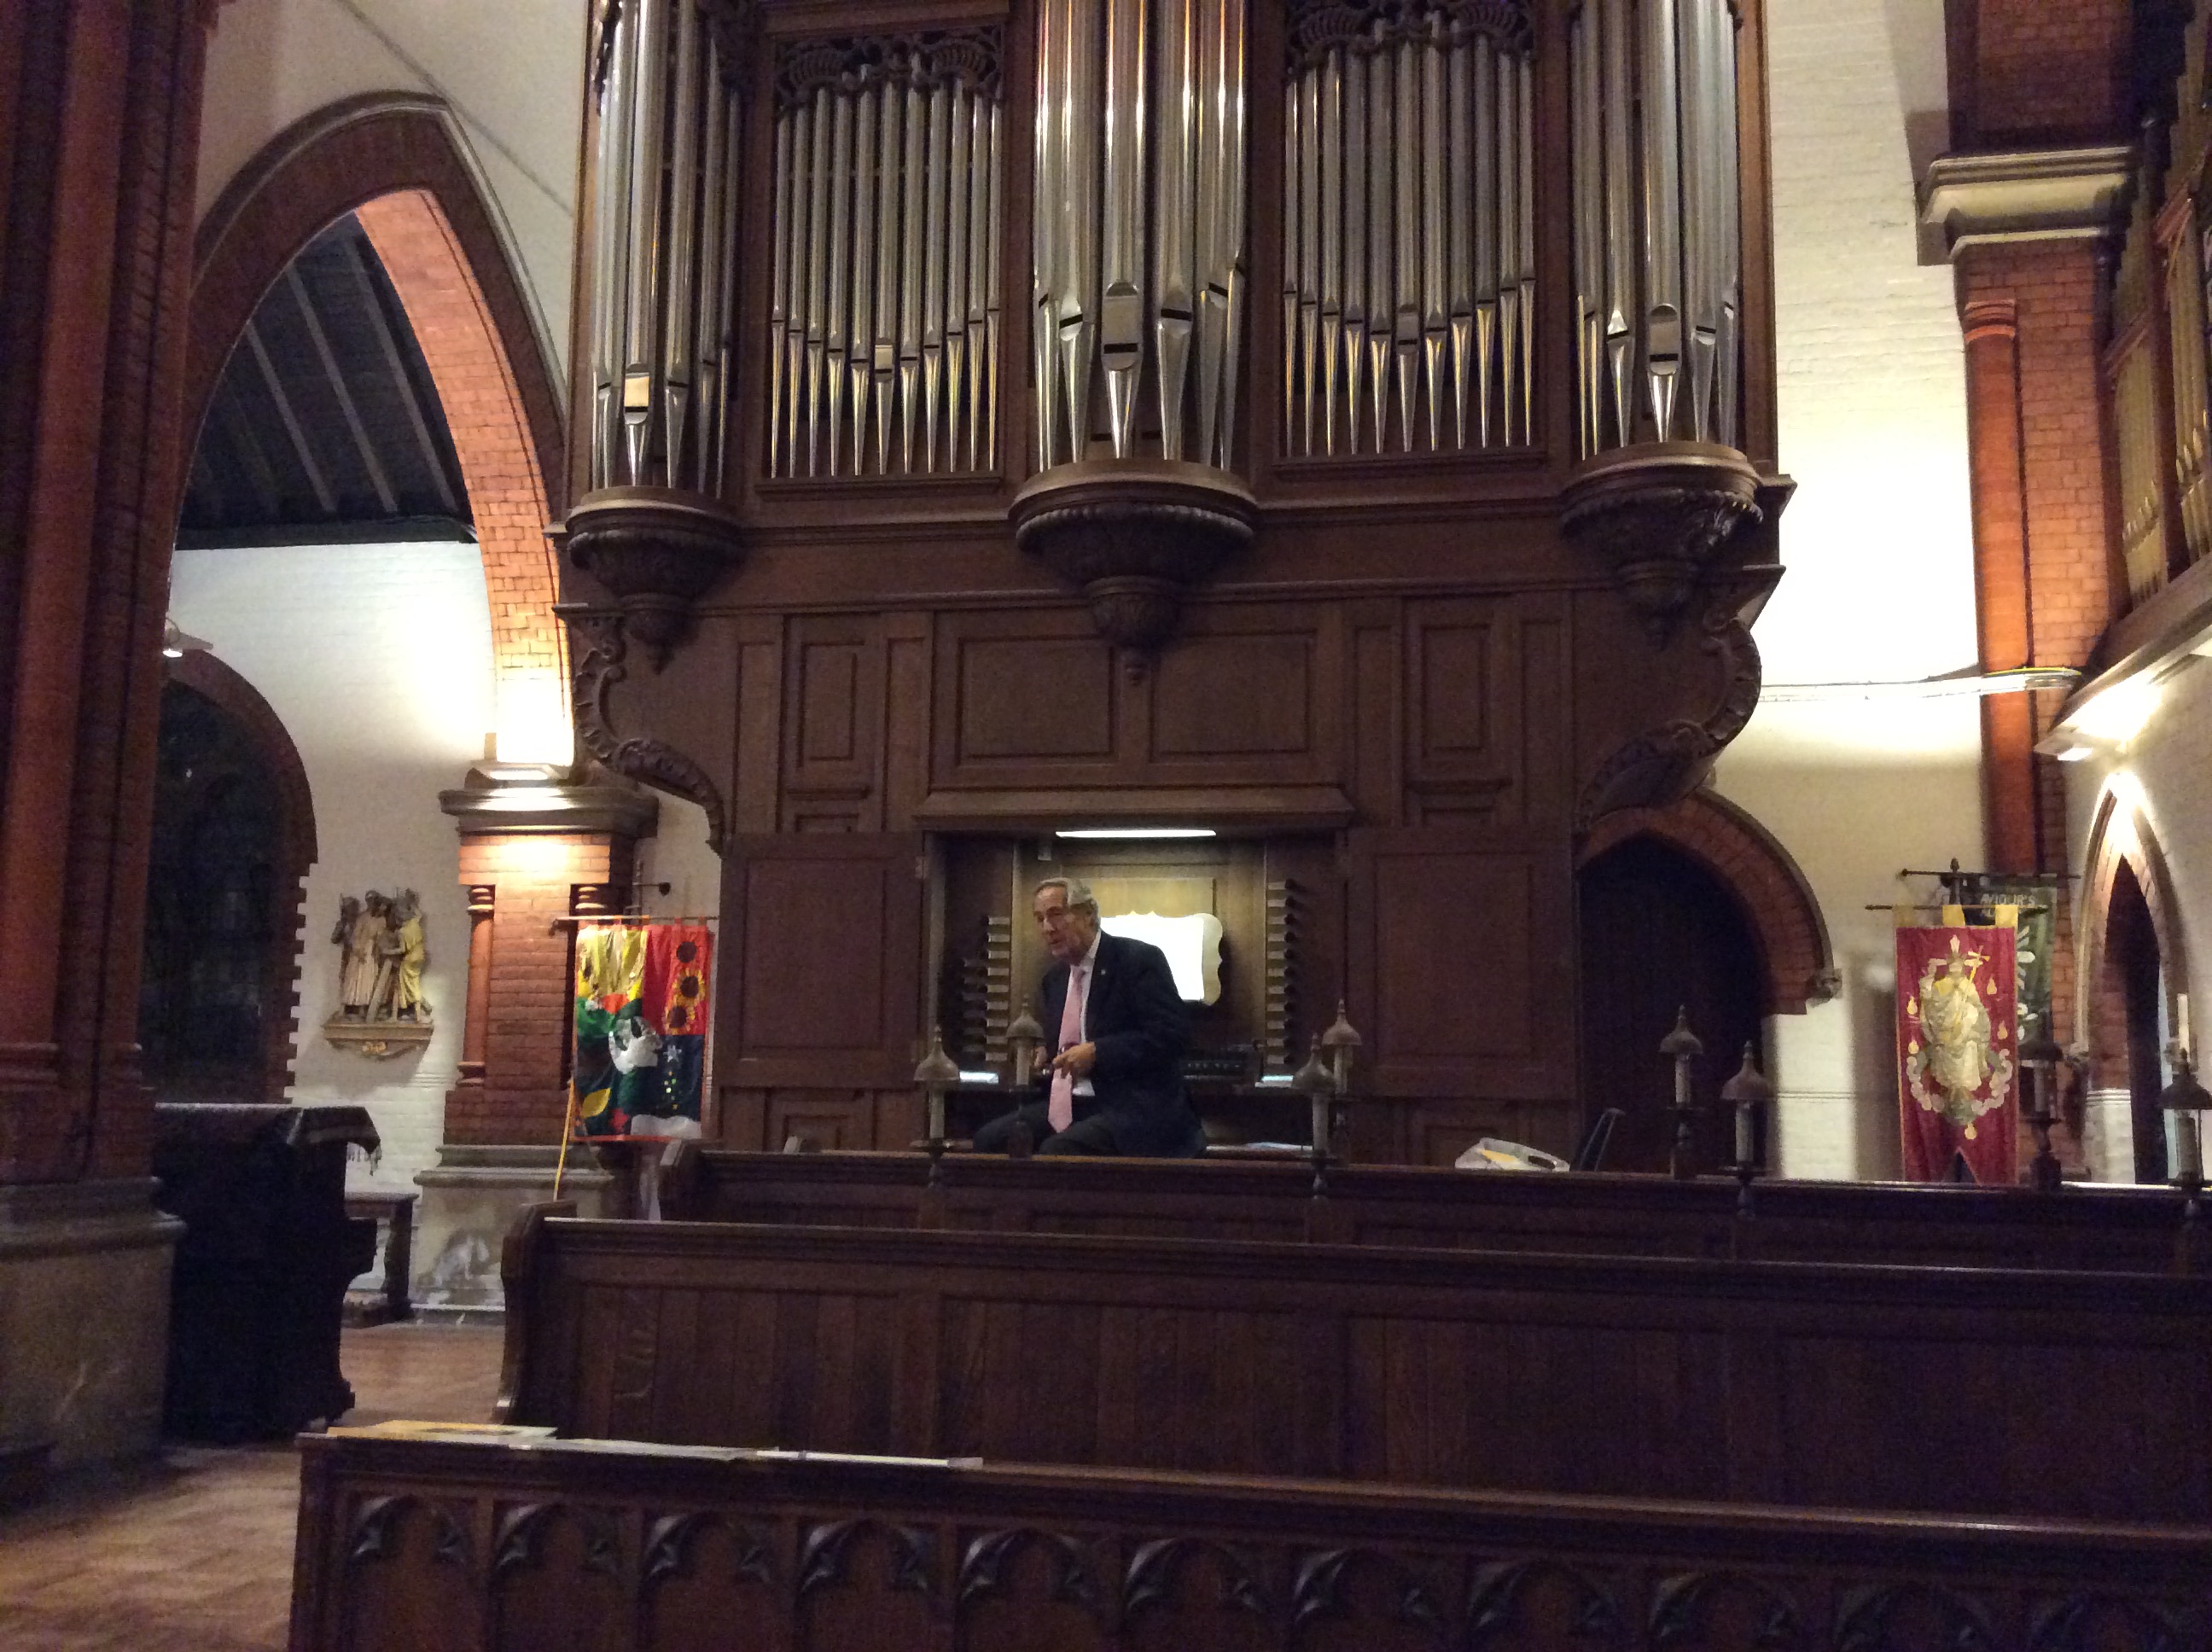 Image: Dr Peter Stokes at the organ